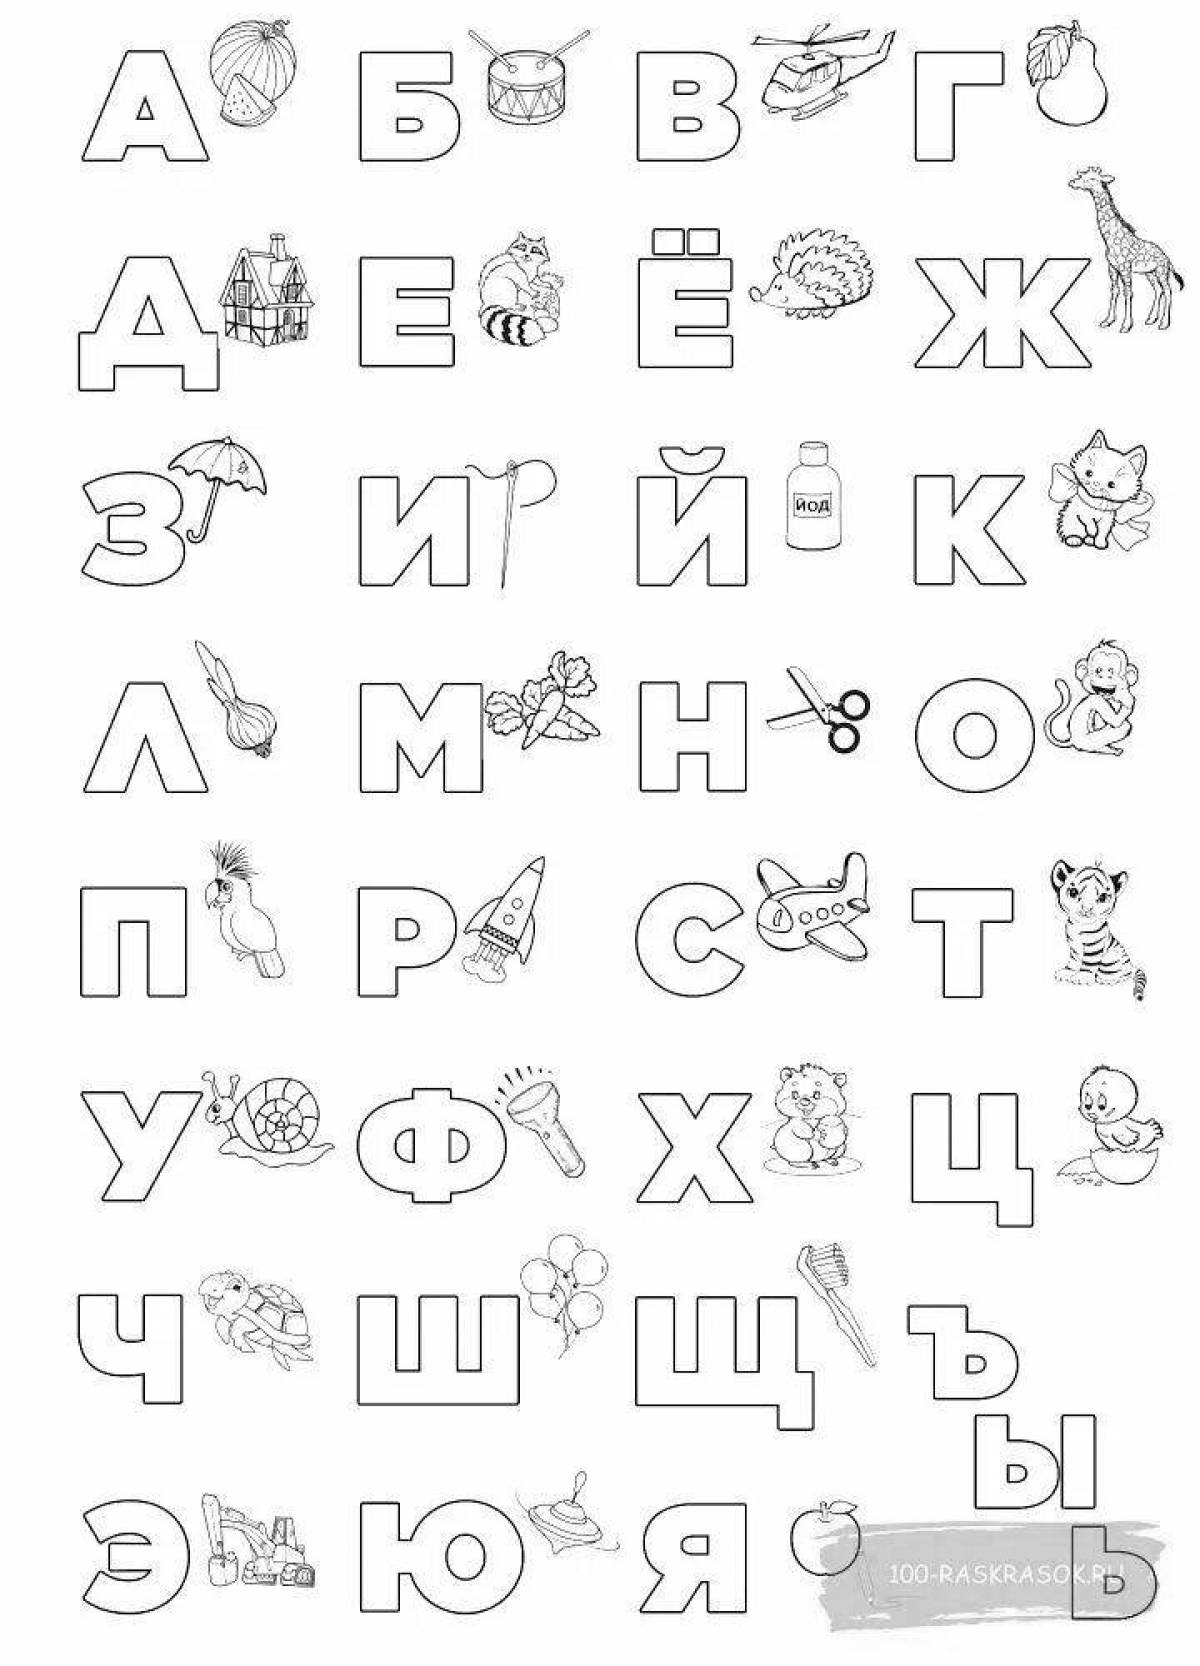 For children 3 4 years old alphabet #23